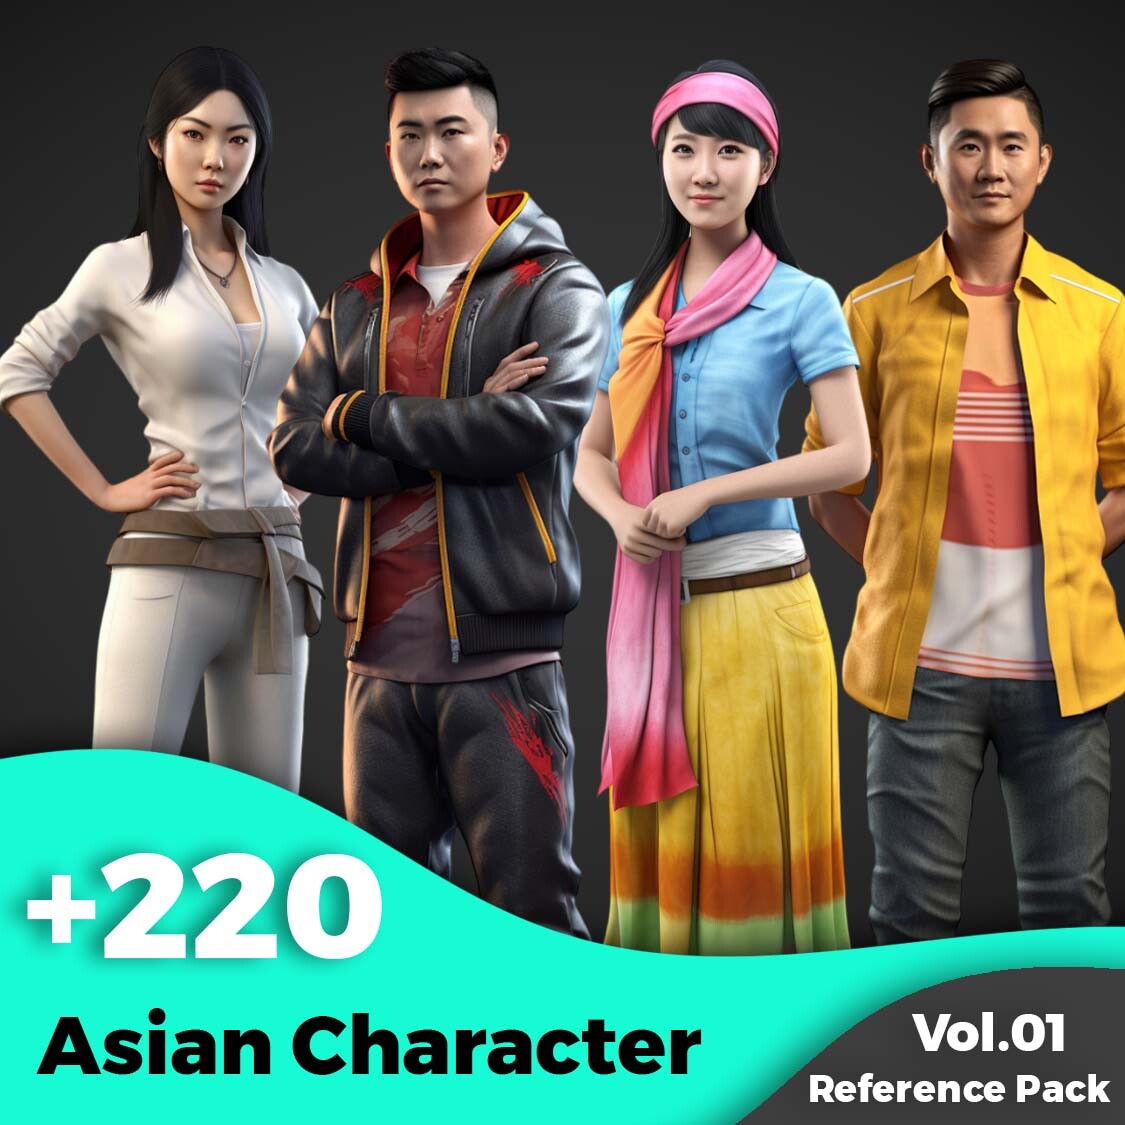 ArtStation - +220 Asian Character